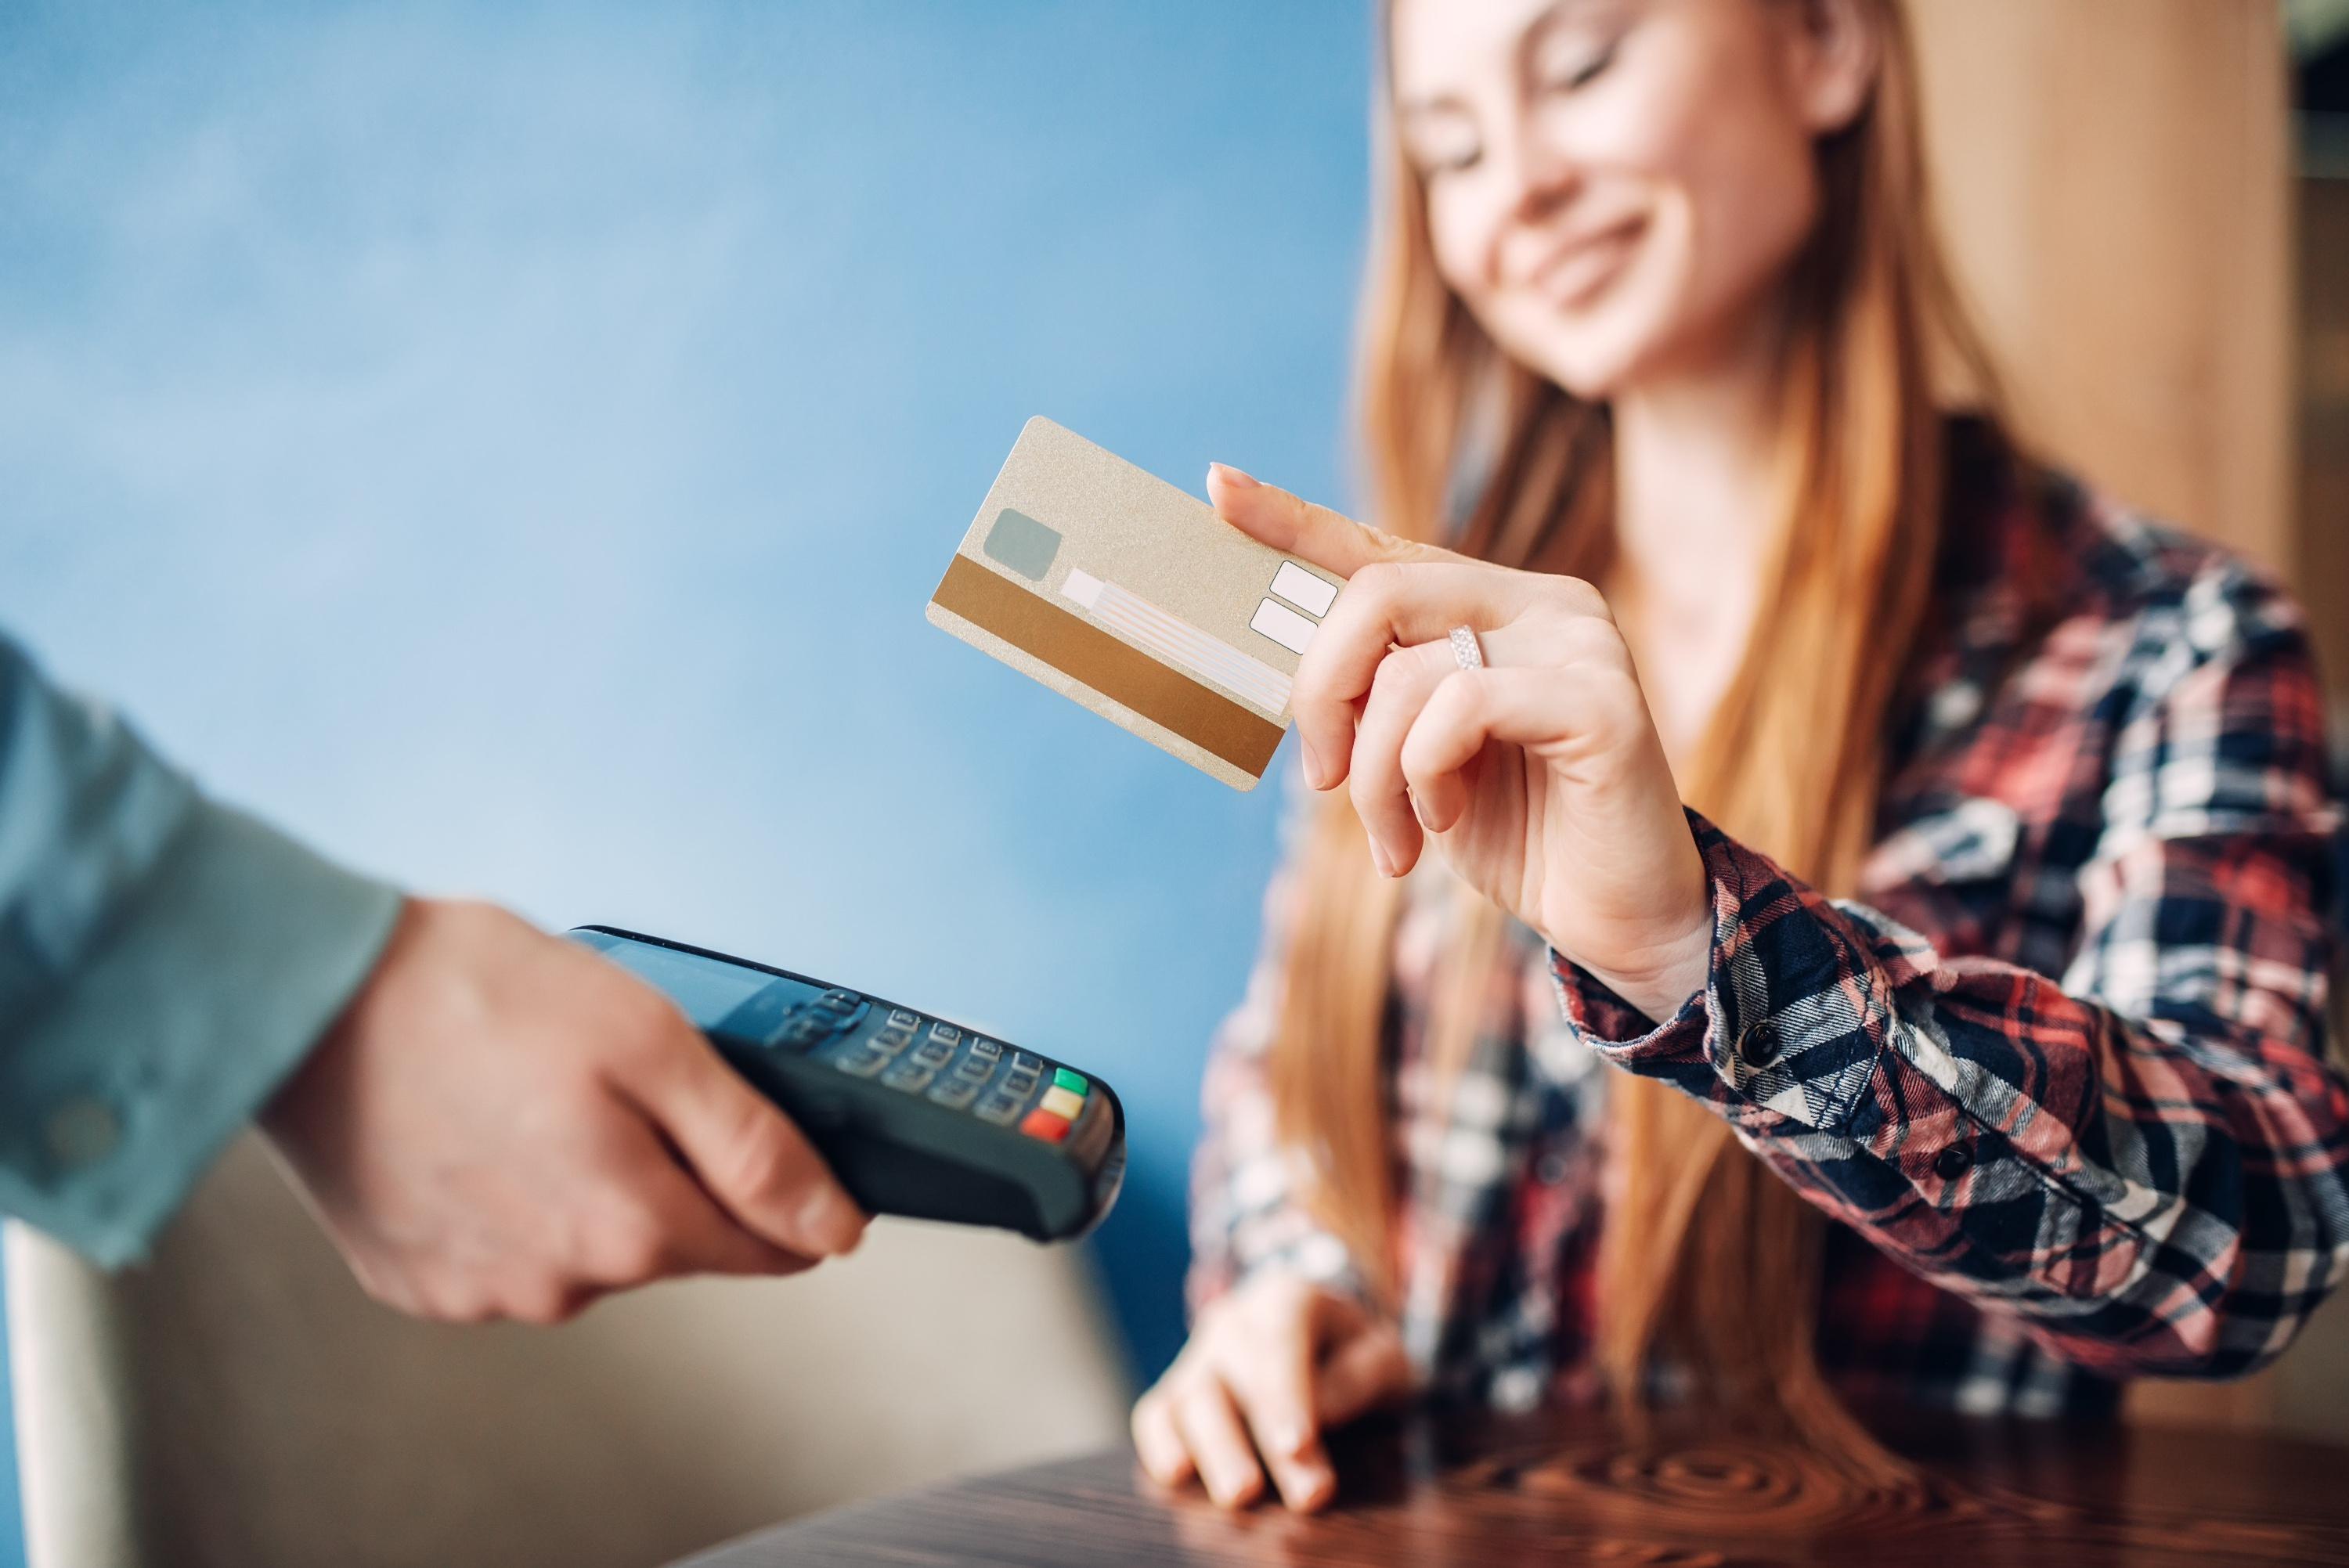 Paying seconds. Девушка с картой в руках. Девушка с кредиткой. Кредитная карта в руке. Женщина с кредитной картой.